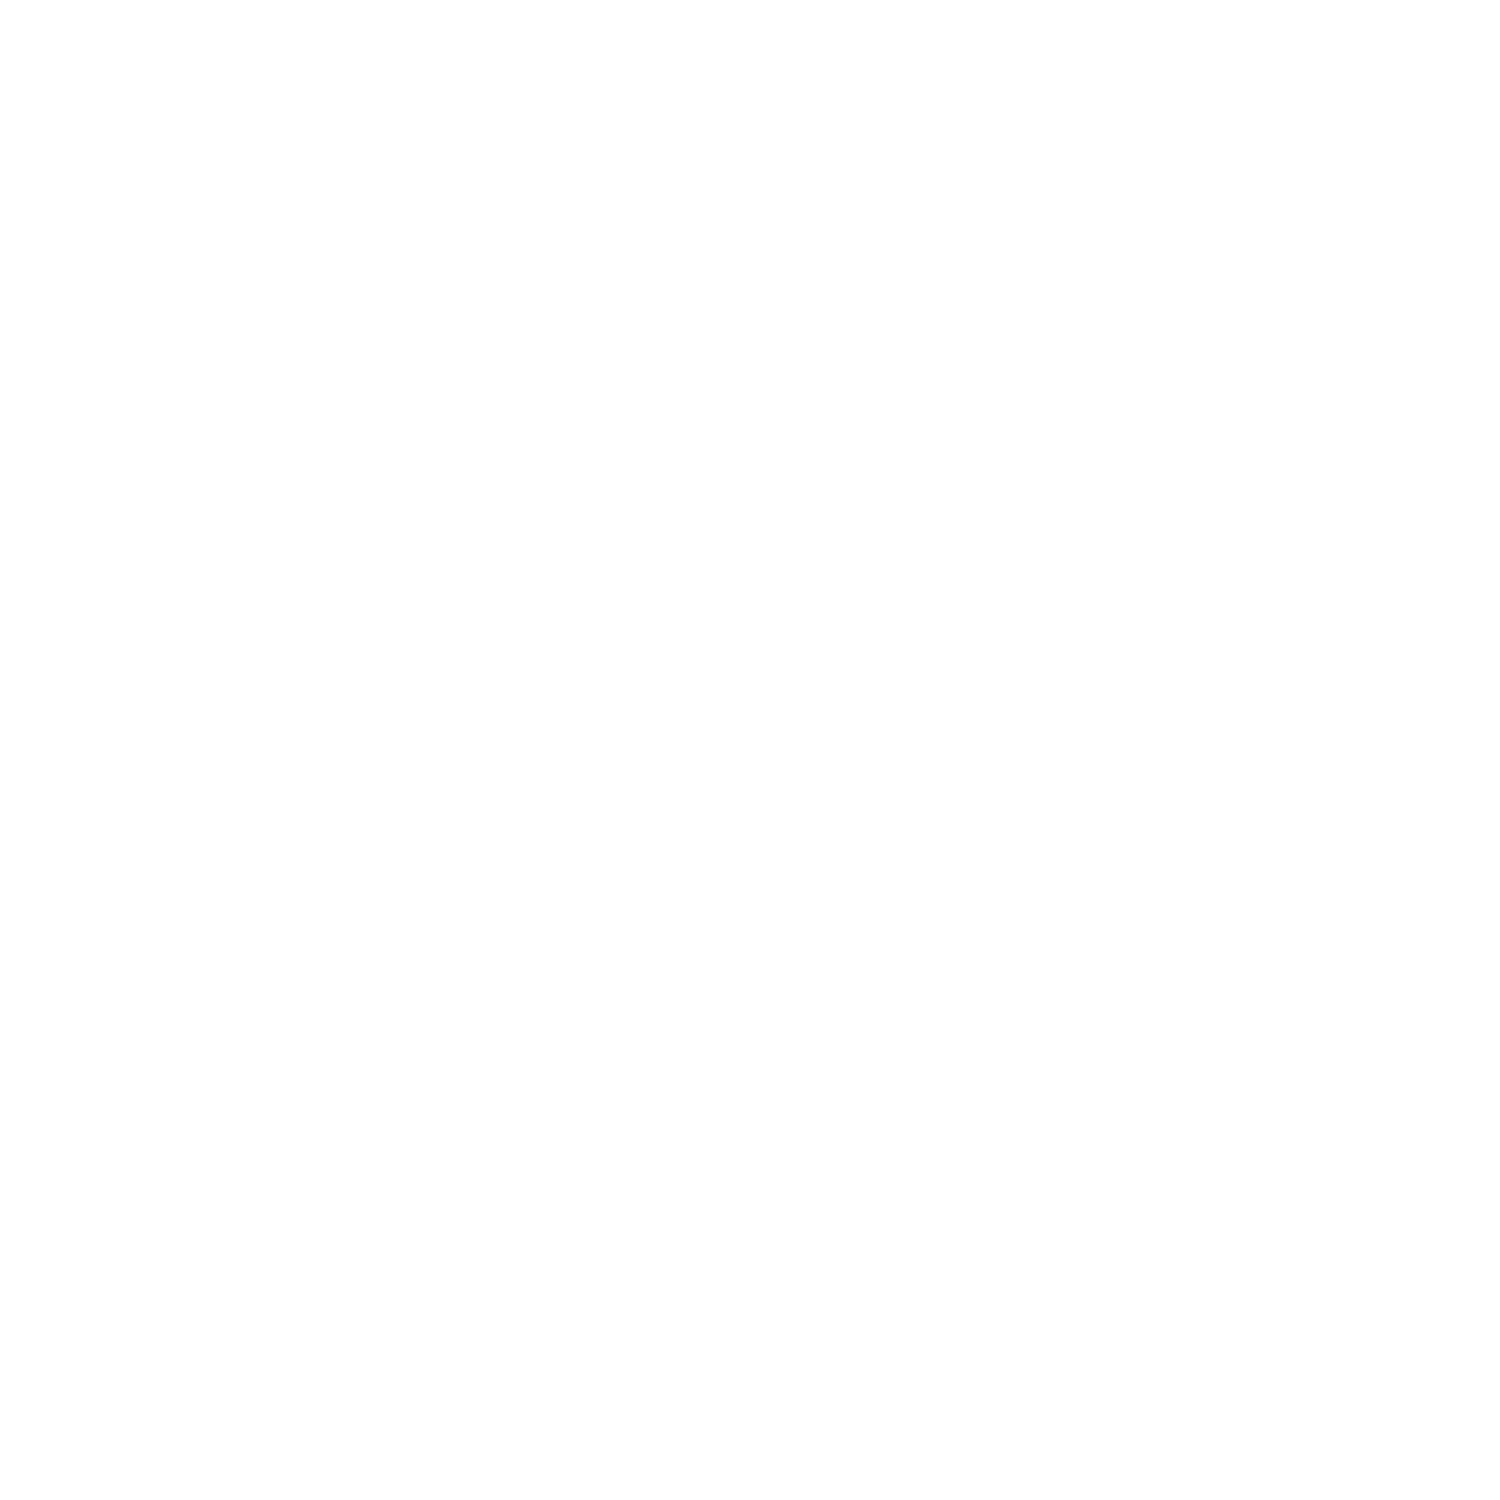 Romann Logistics